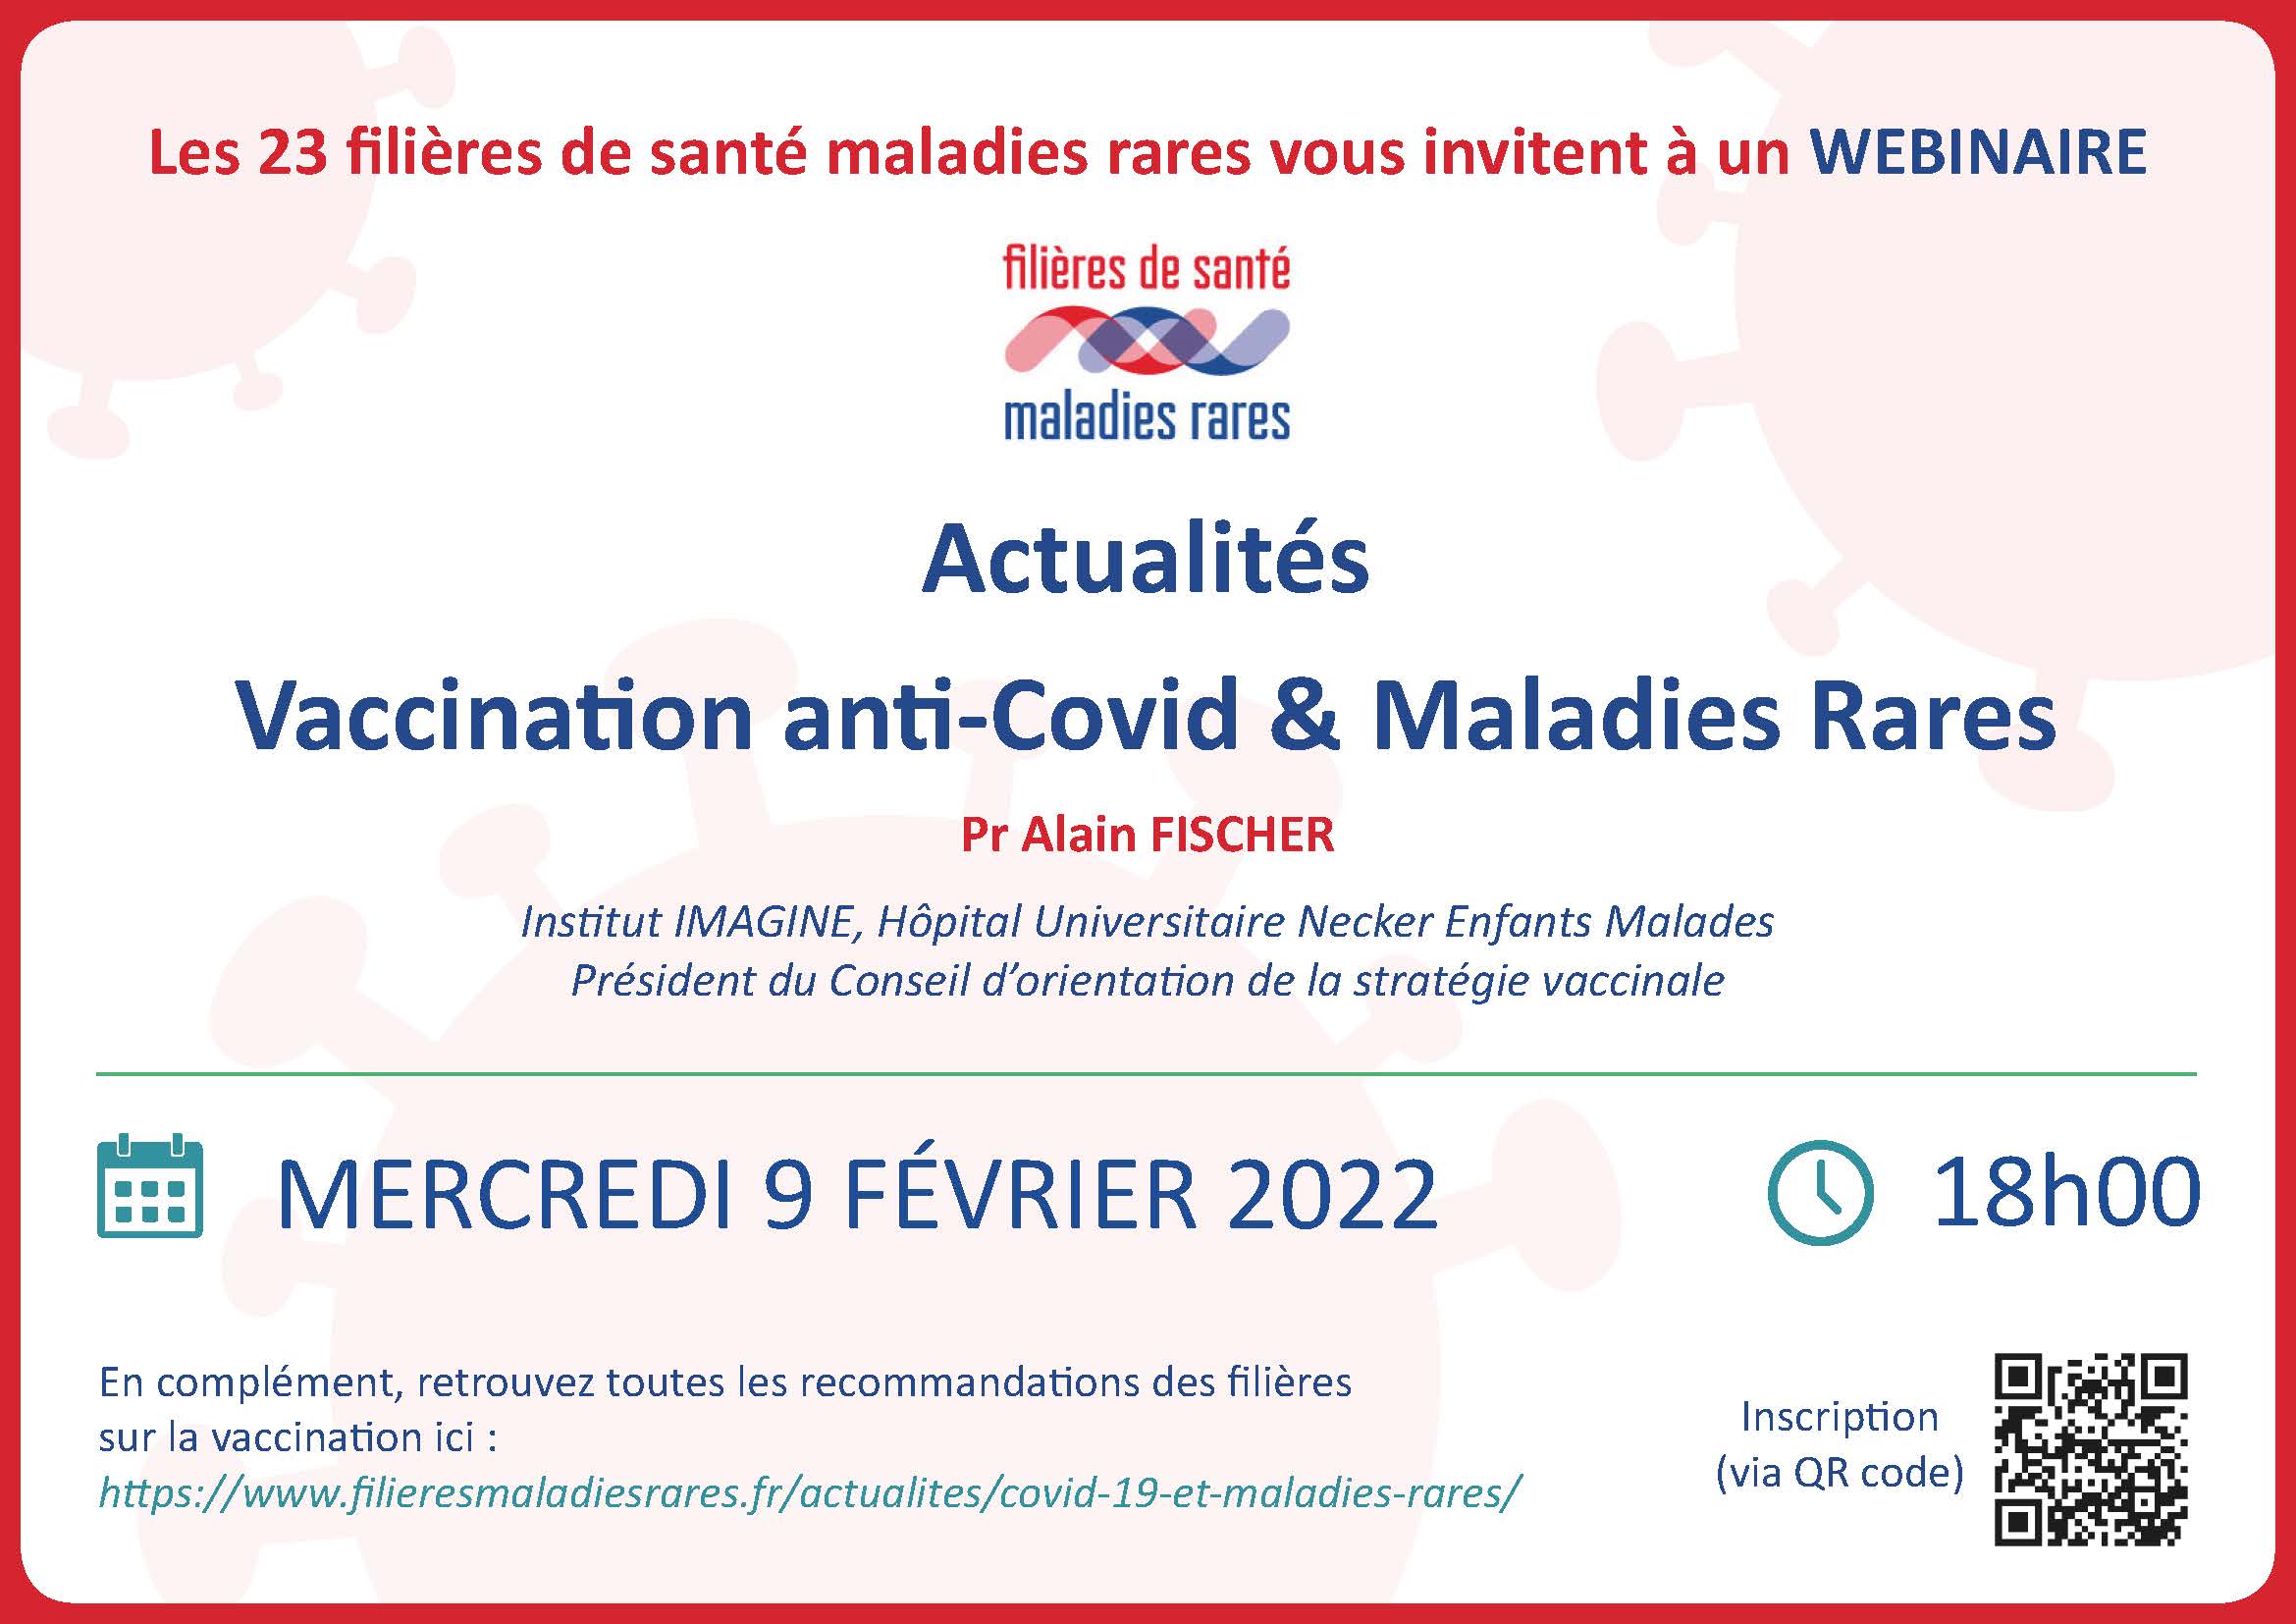 WEBINAIRE Vaccination anti-Covid & Maladies Rares